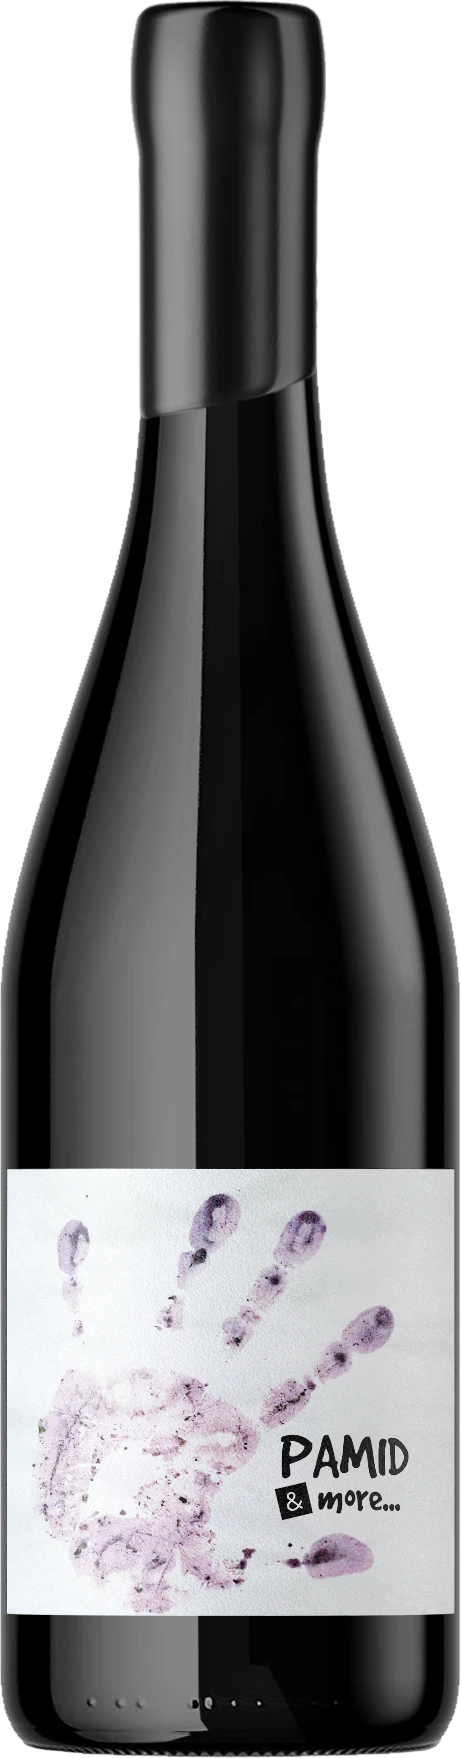 Pamid bottle